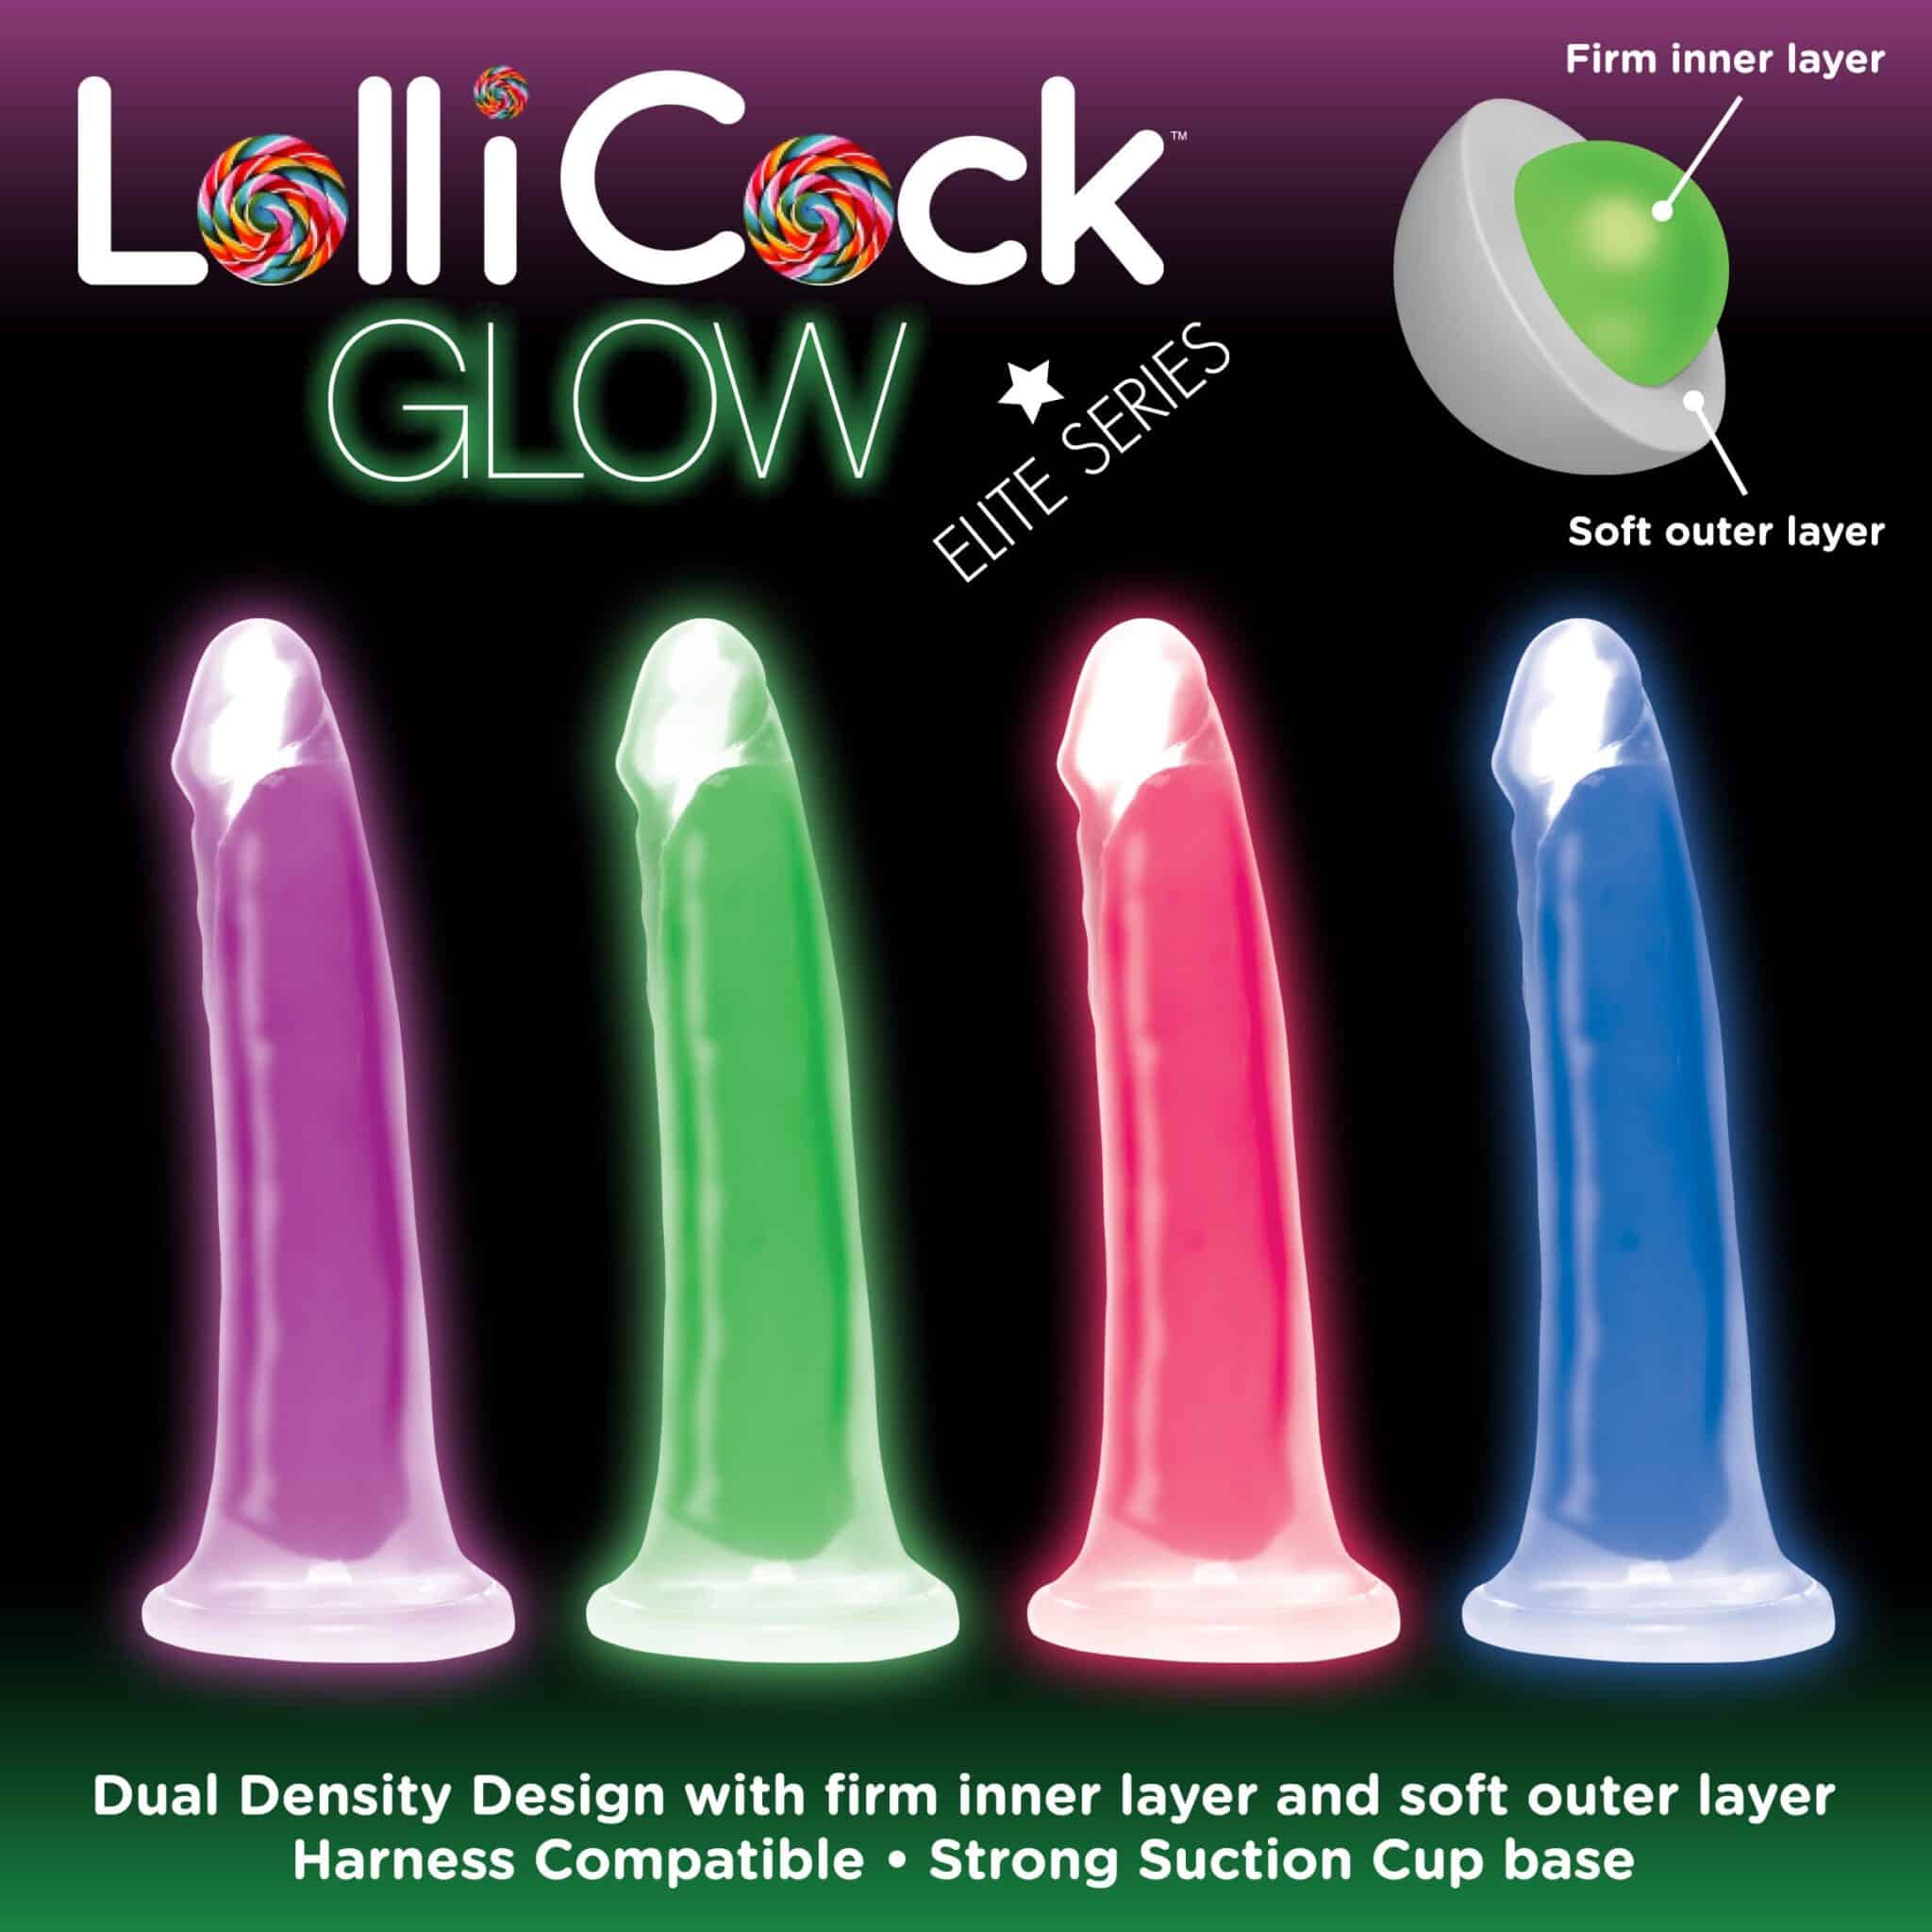 7 Inch Glow-in-the-Dark Silicone Dildo – Green